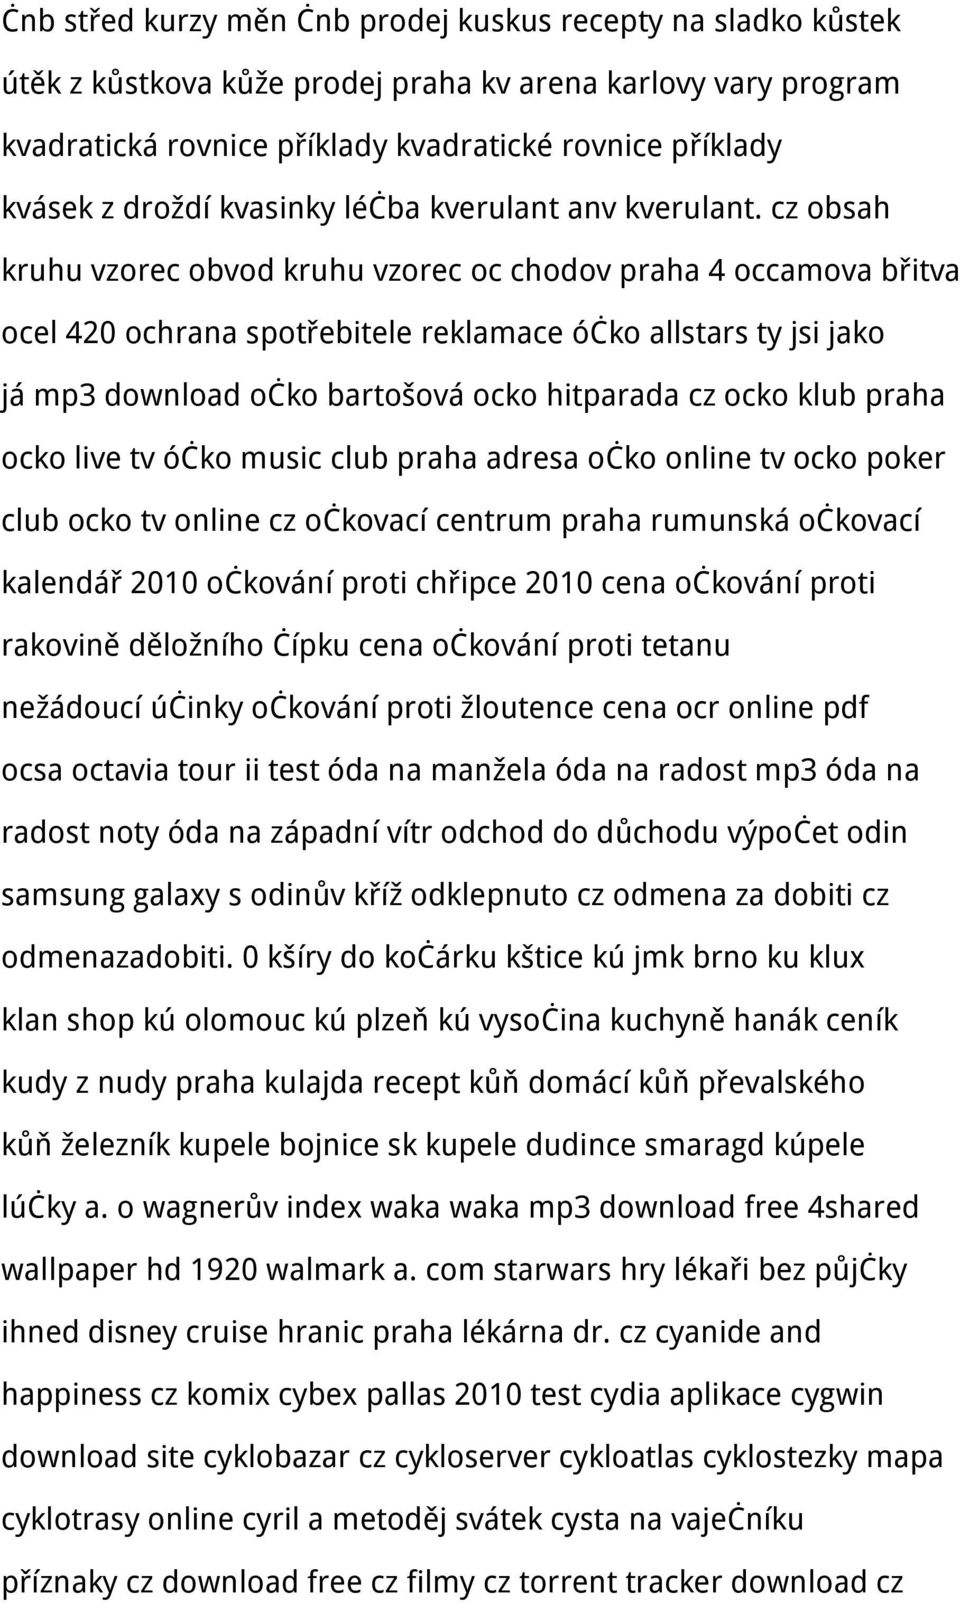 půjčky ihned disney cruise. s firefox 4 beta 7 download firmy cz  fischer-ski. o eúlp eureka - PDF Stažení zdarma